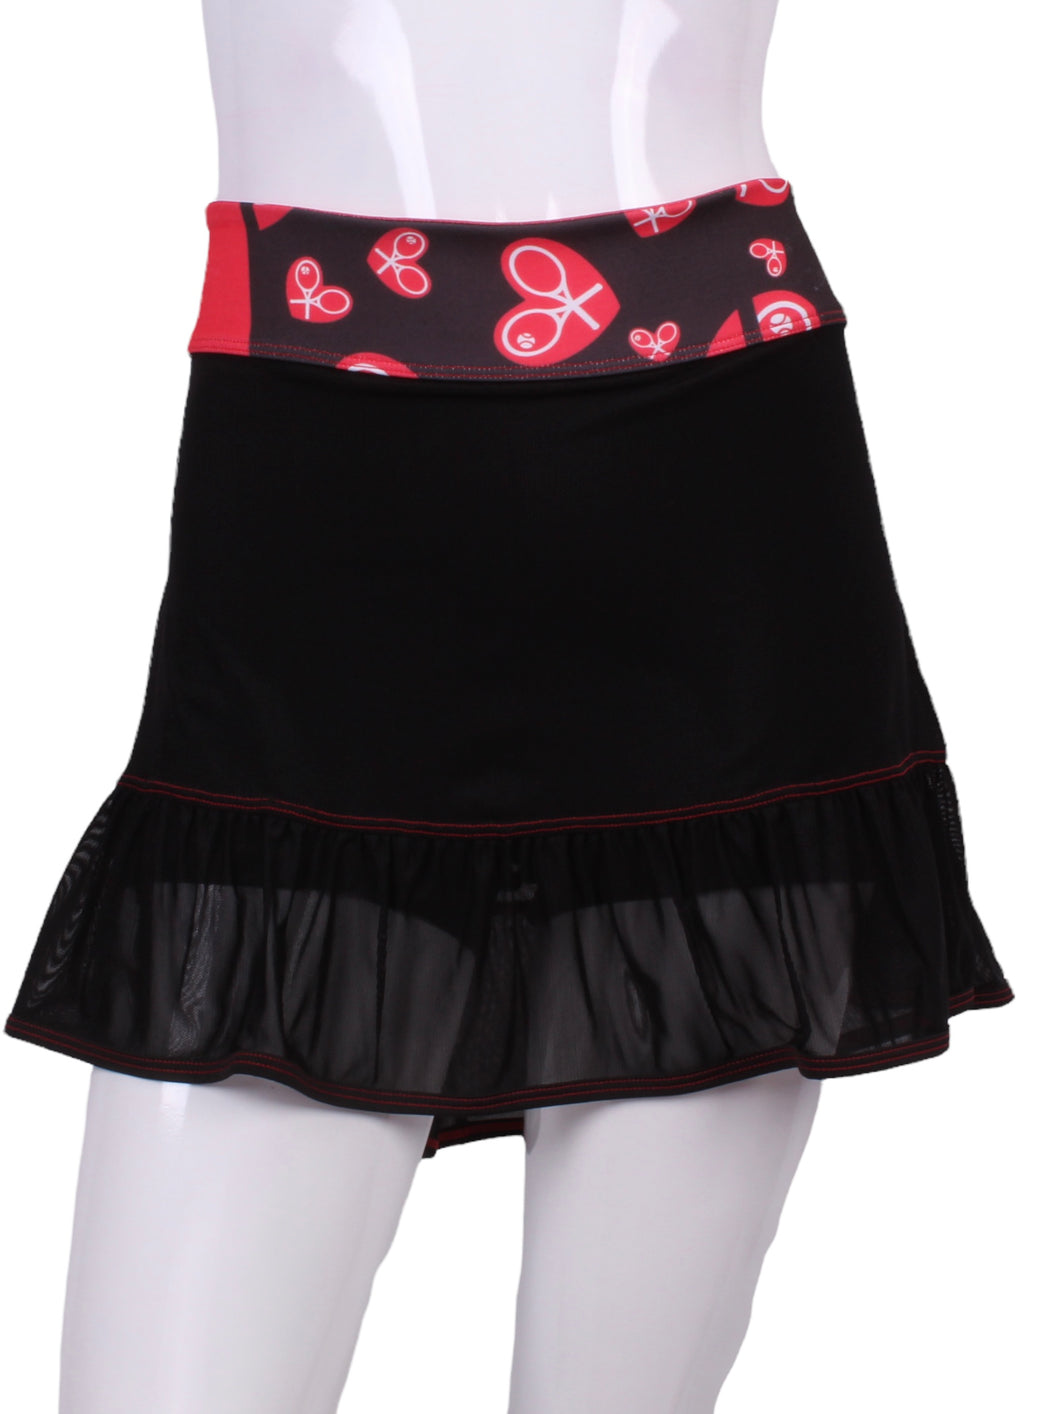 Black Mesh Ruffle Skirt Heart Waistband - I LOVE MY DOUBLES PARTNER!!!